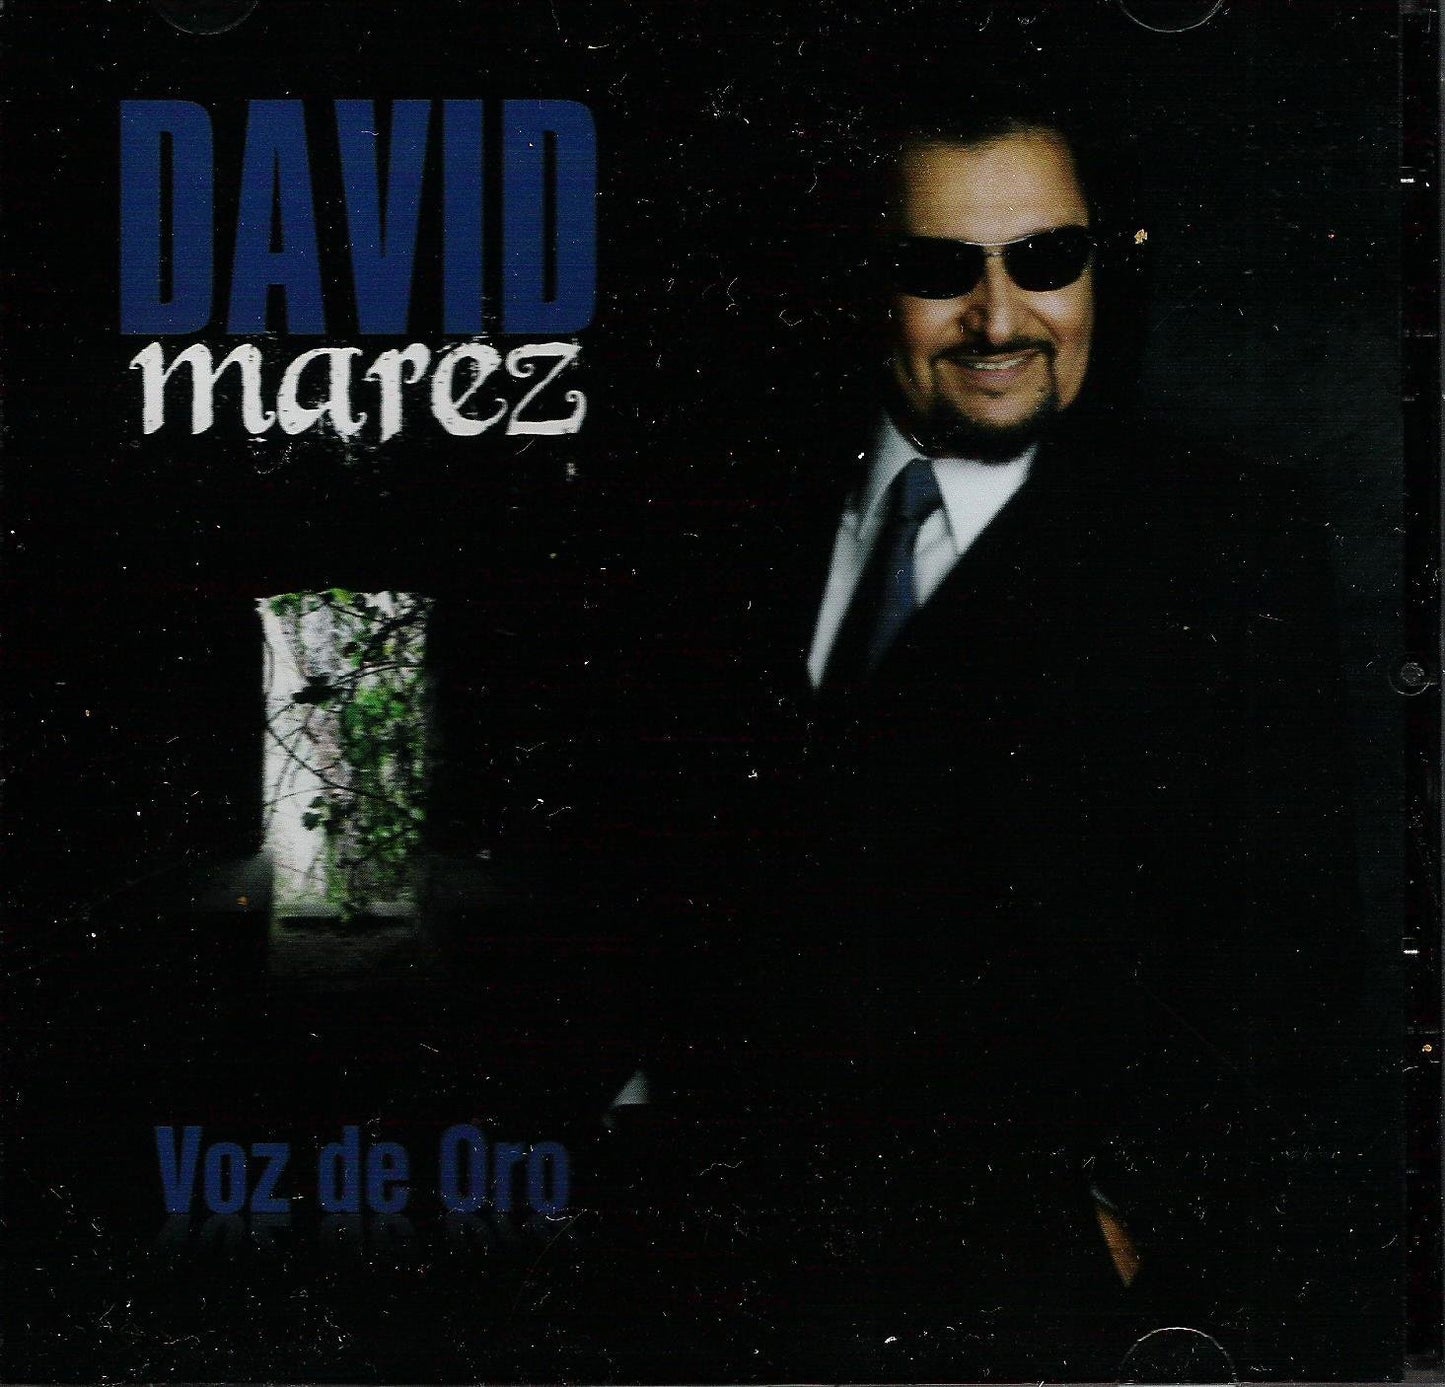 David Marez - Voz De Oro (CD)